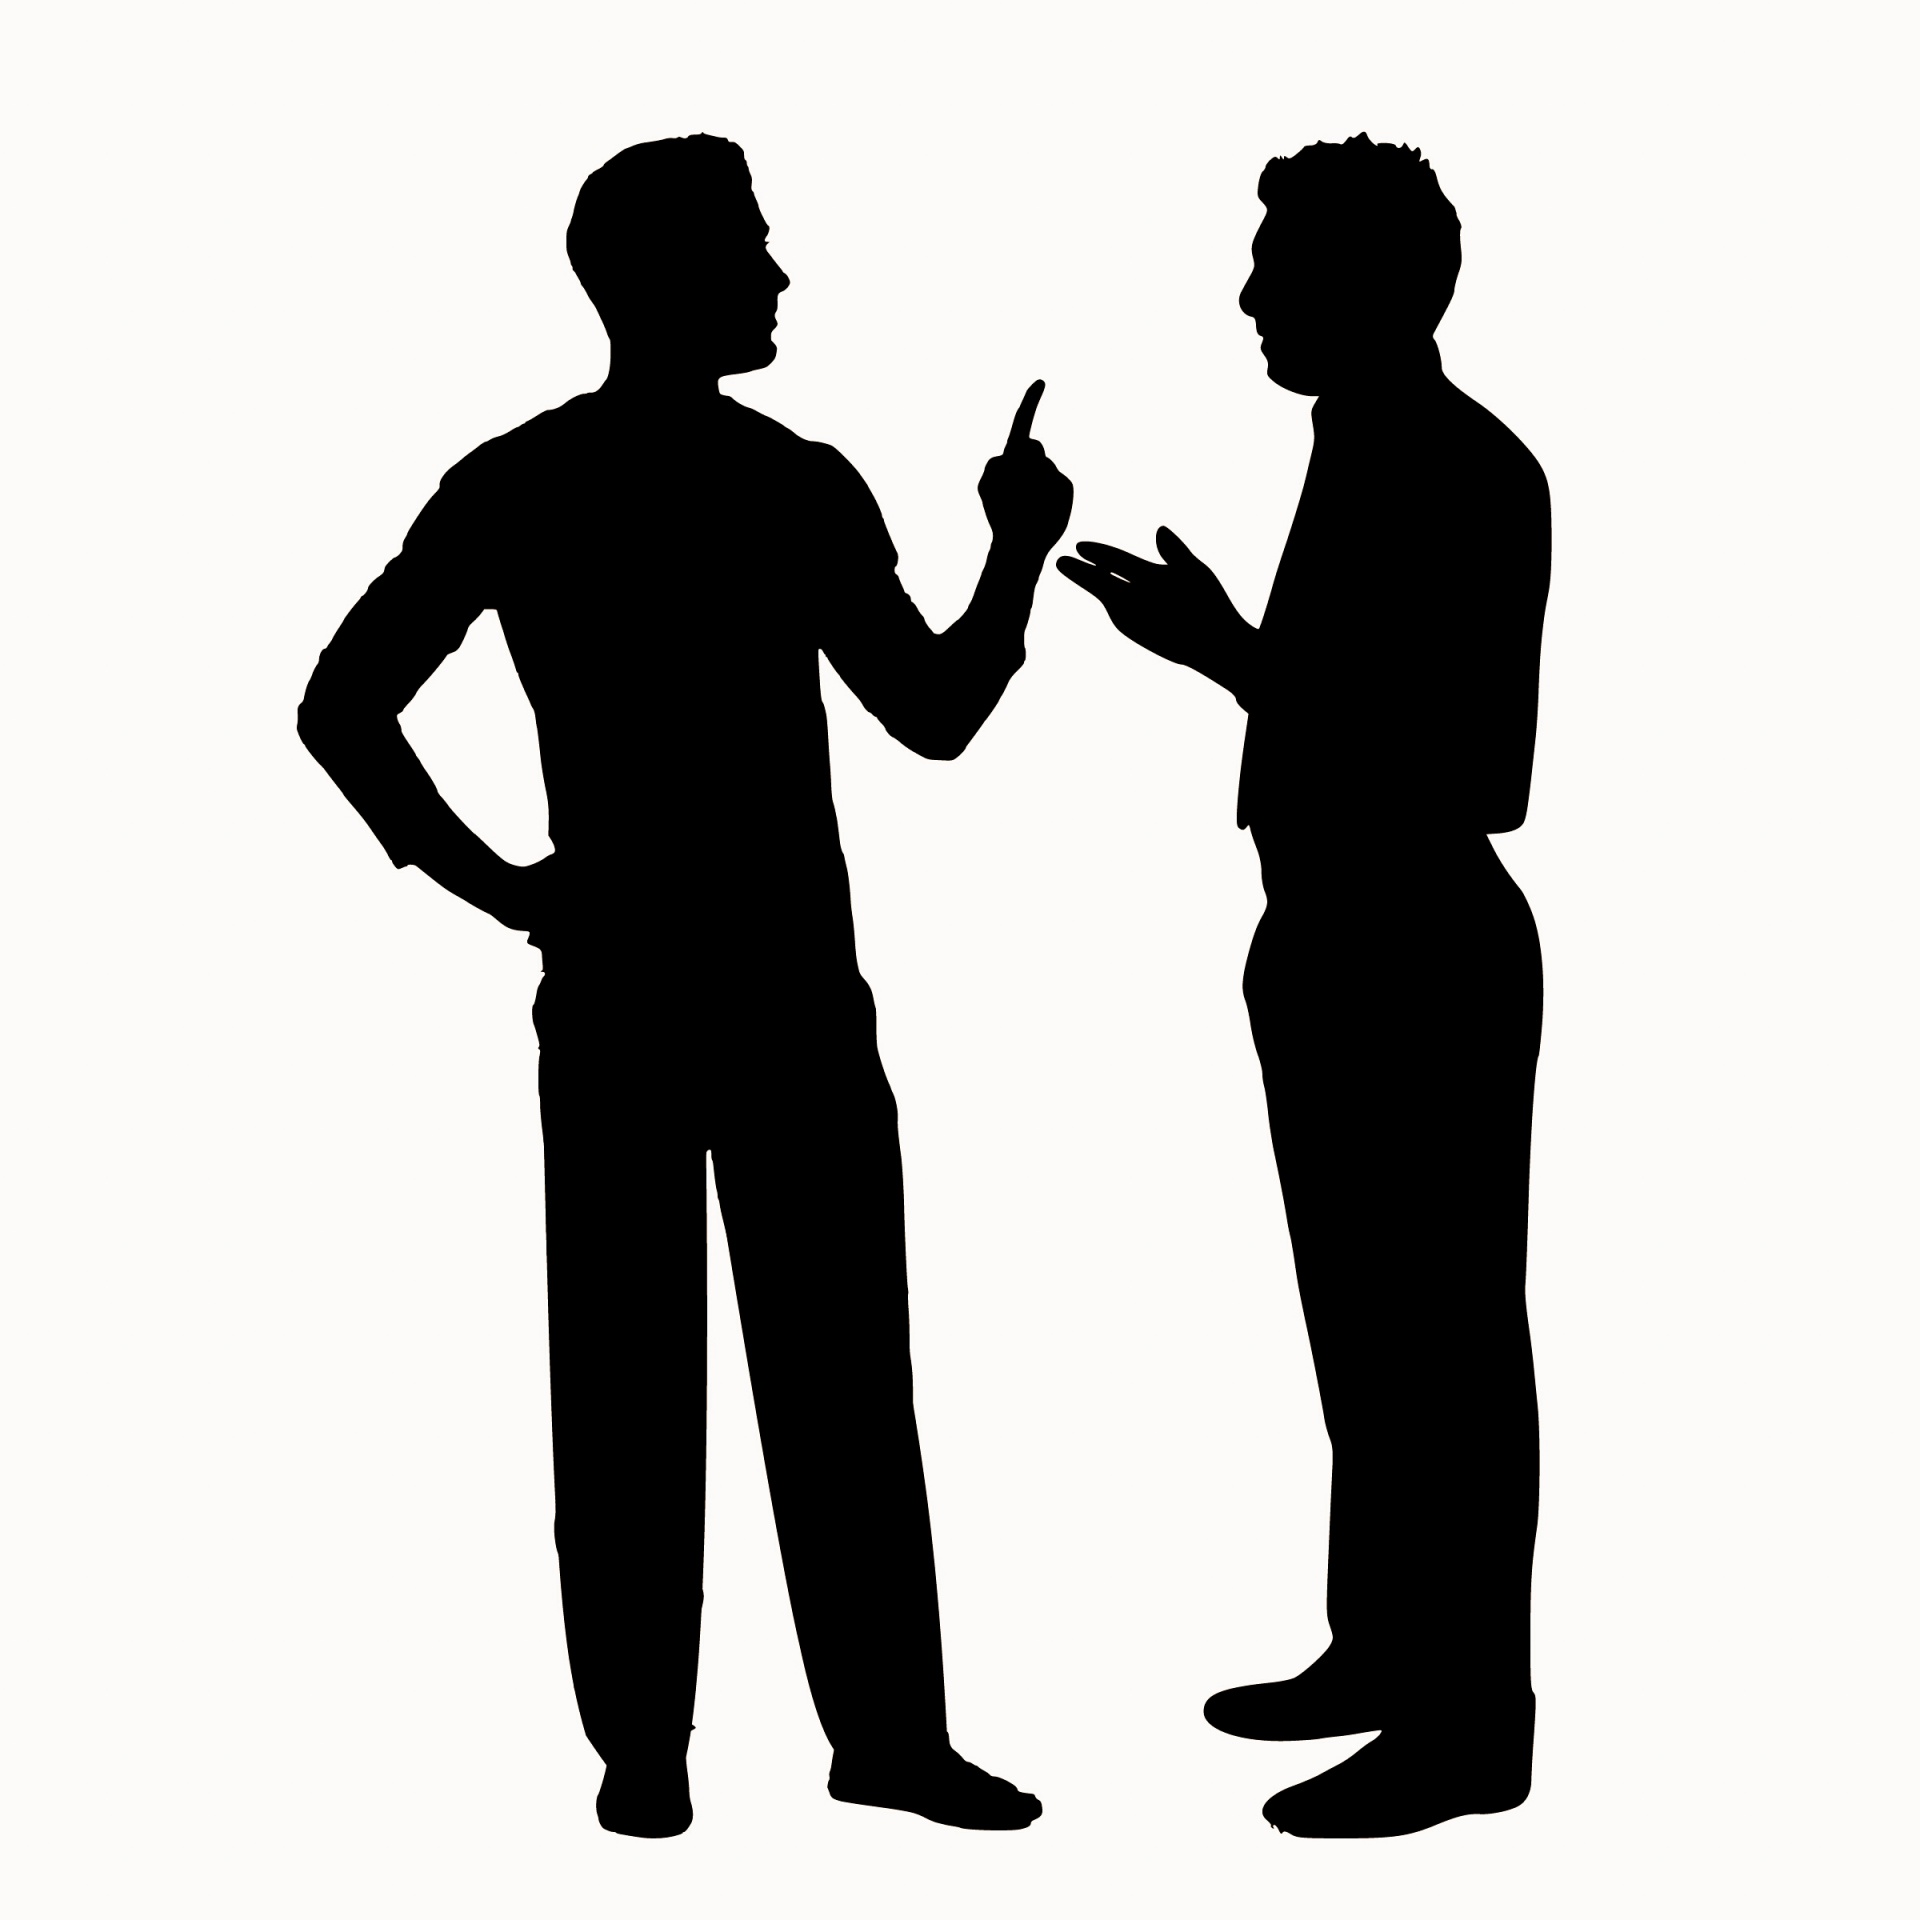 argument, man, angry, silhouette, confrontation, dispute, businessmen, business, conflict, arguing, argue, anger, talking, intransigent, meeting, problem